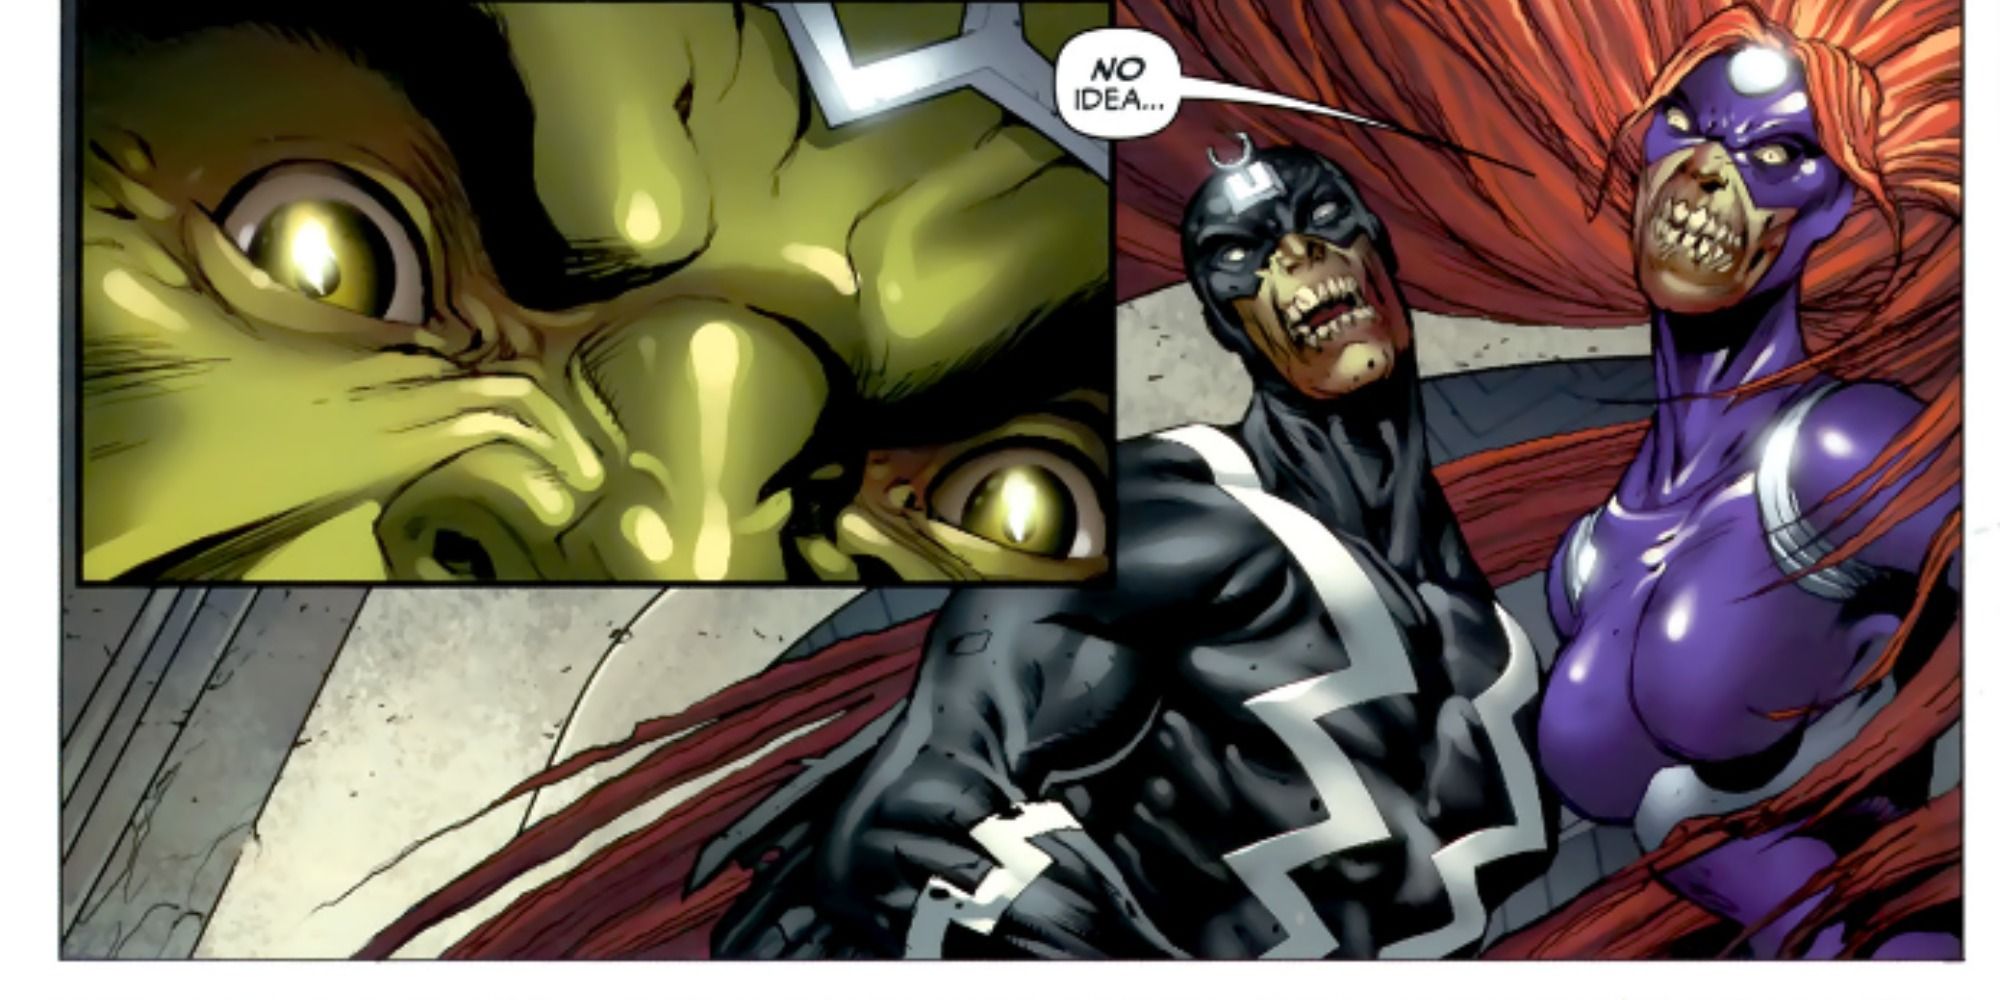 Black Bolt attacks Hulk in Marvel Zombies Return comic book.